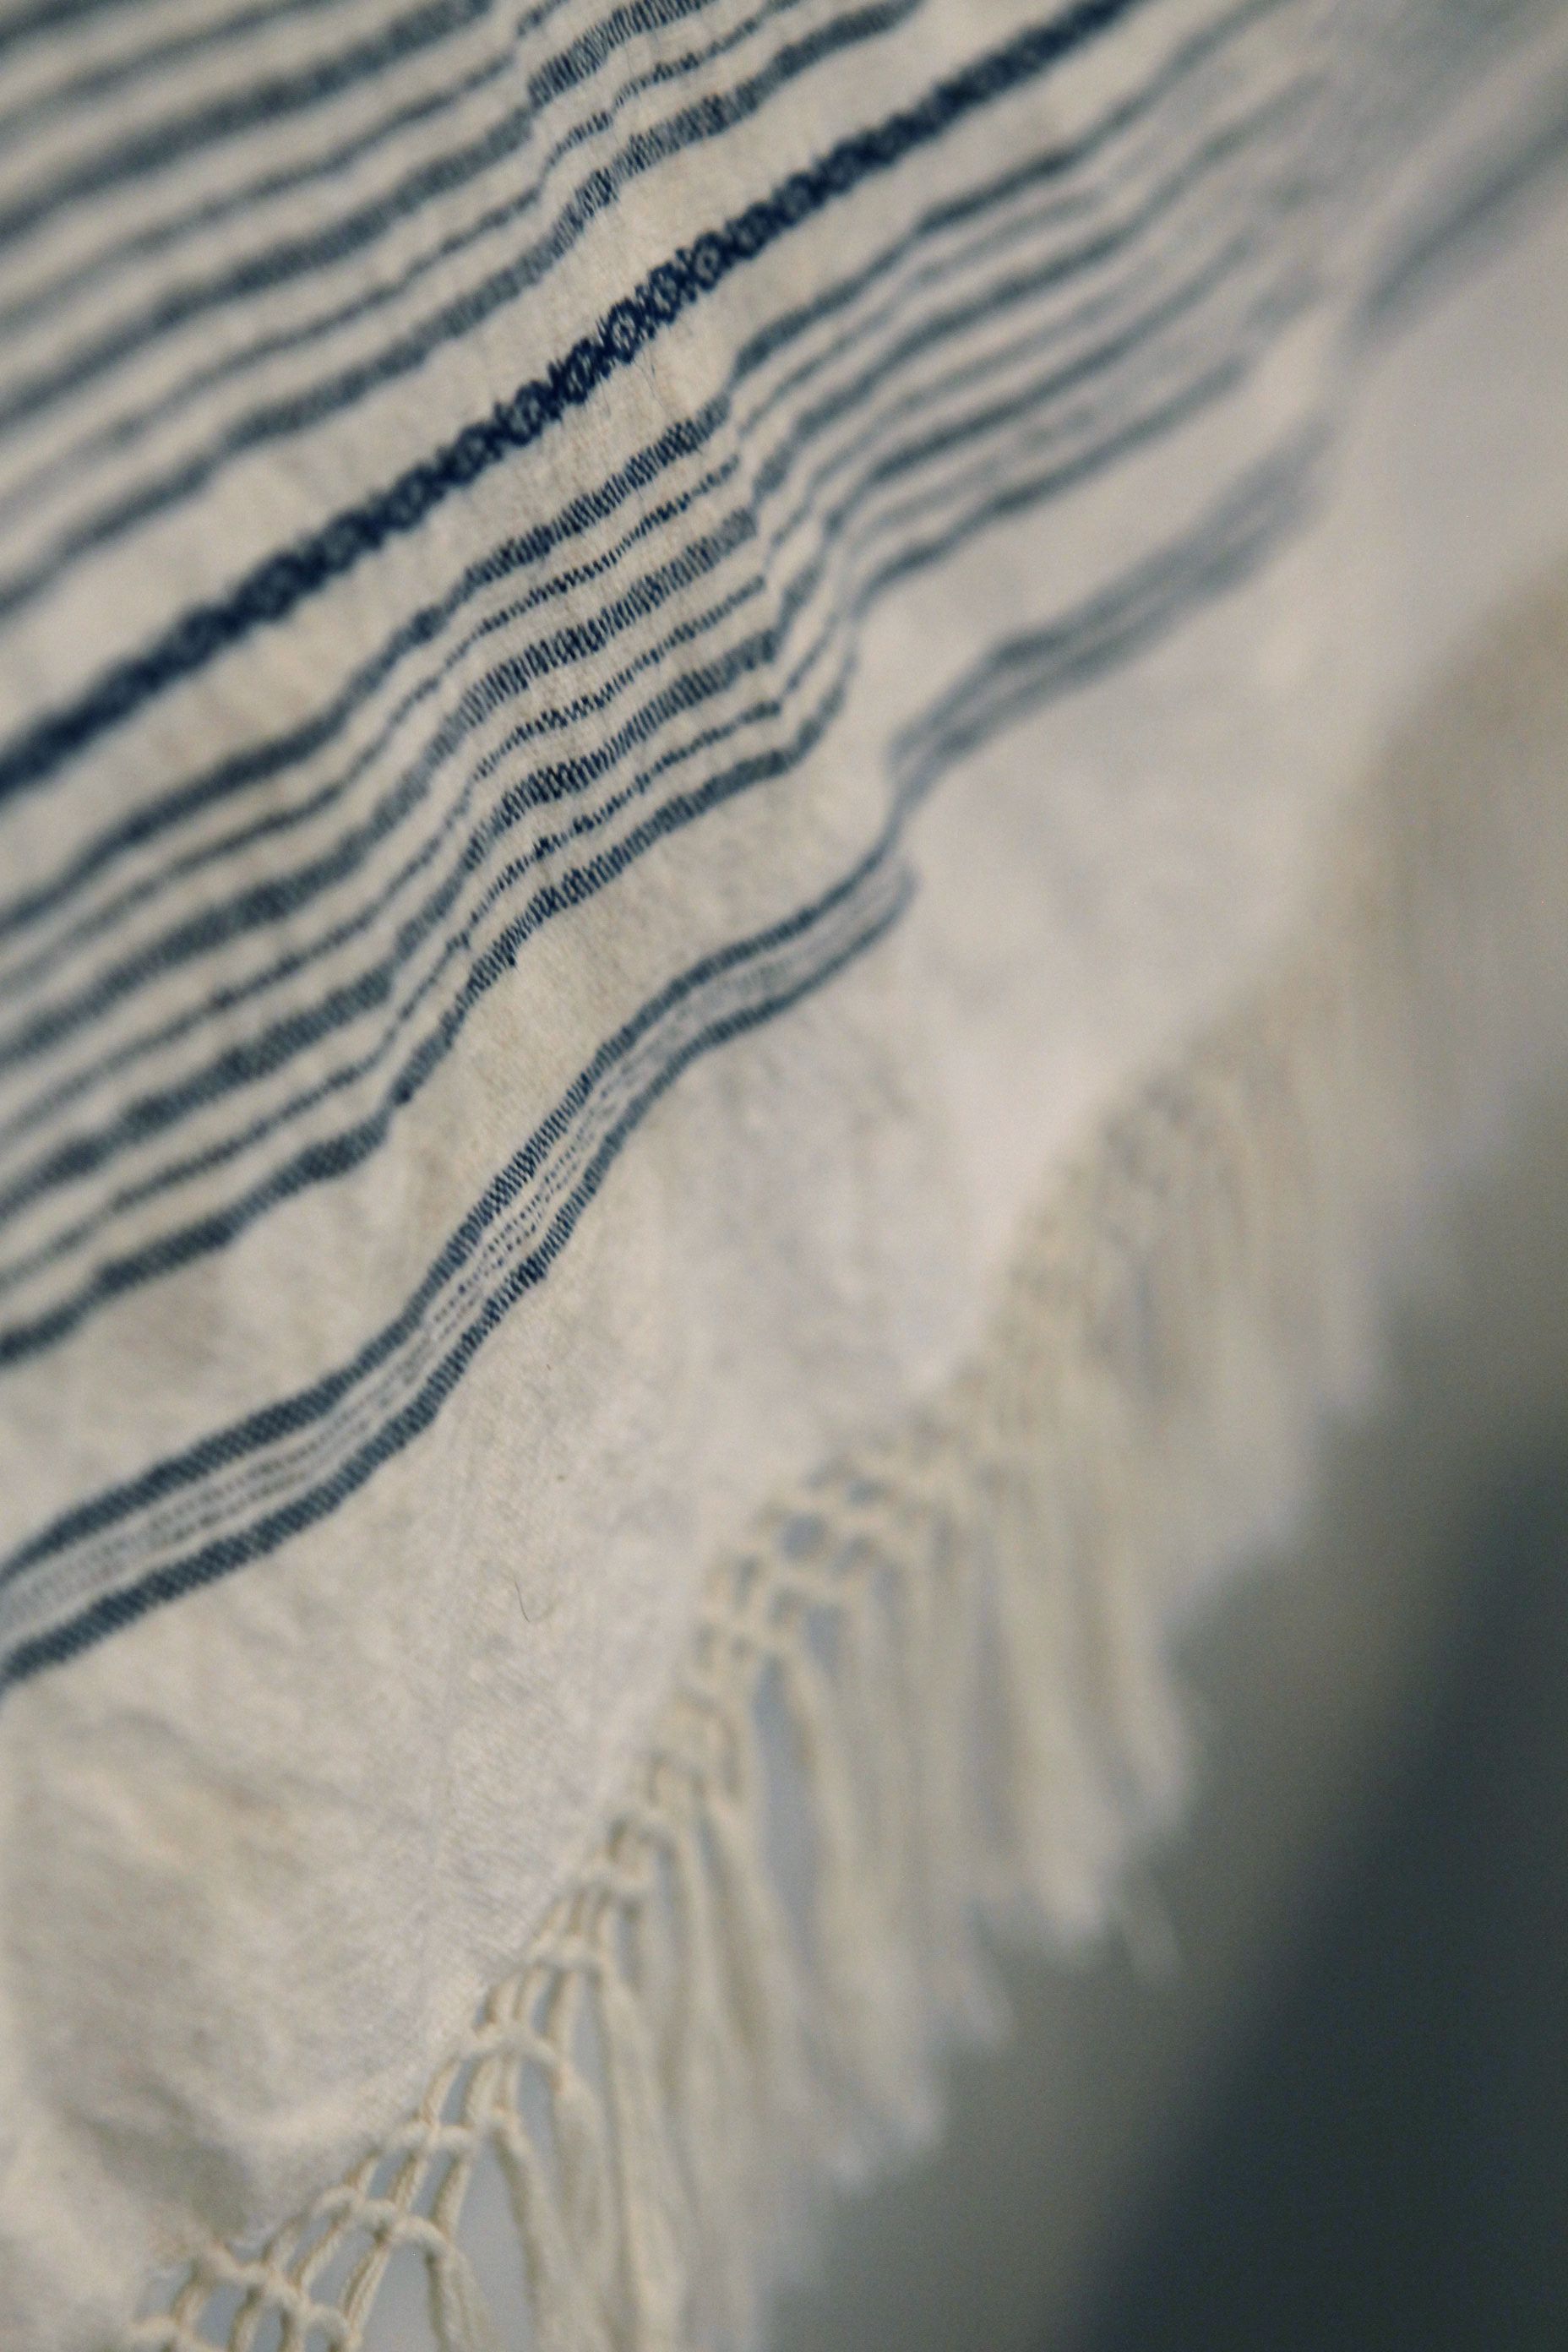  Woven Greek towel detail 